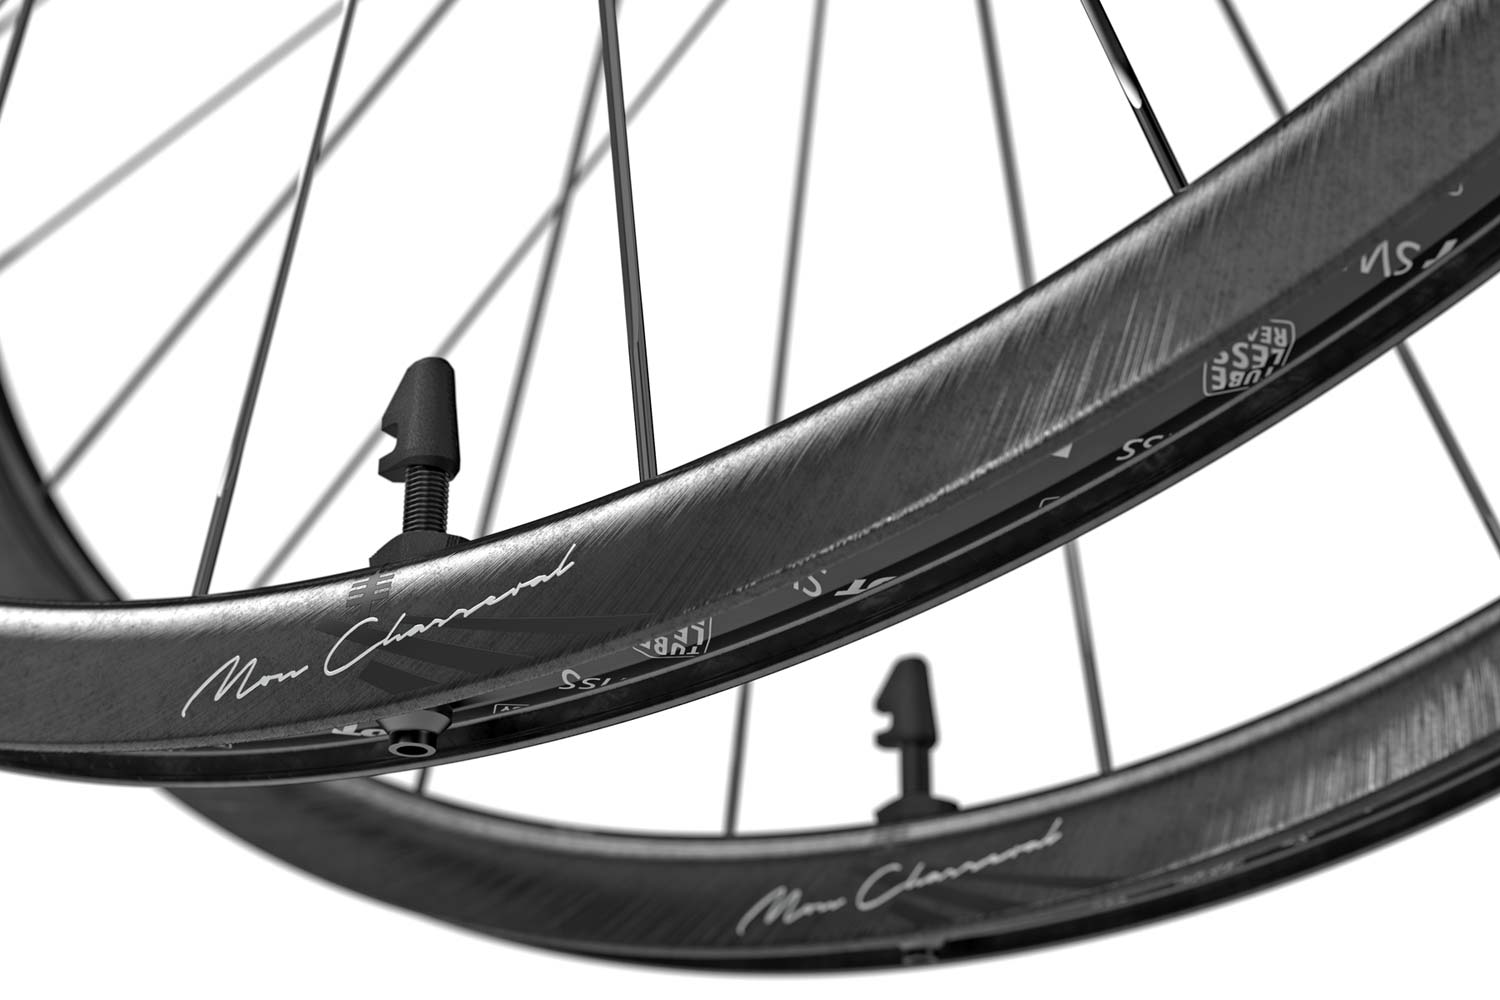 DT-Swiss-Mon-Chasseral-carbon-wheels_DT-Swiss-PRC-1100-Dicut-24-Mon-Chasseral-lightweight-disc-brake-tubeless-clincher-climbers-road-bike-wheels_rim-detail.jpg